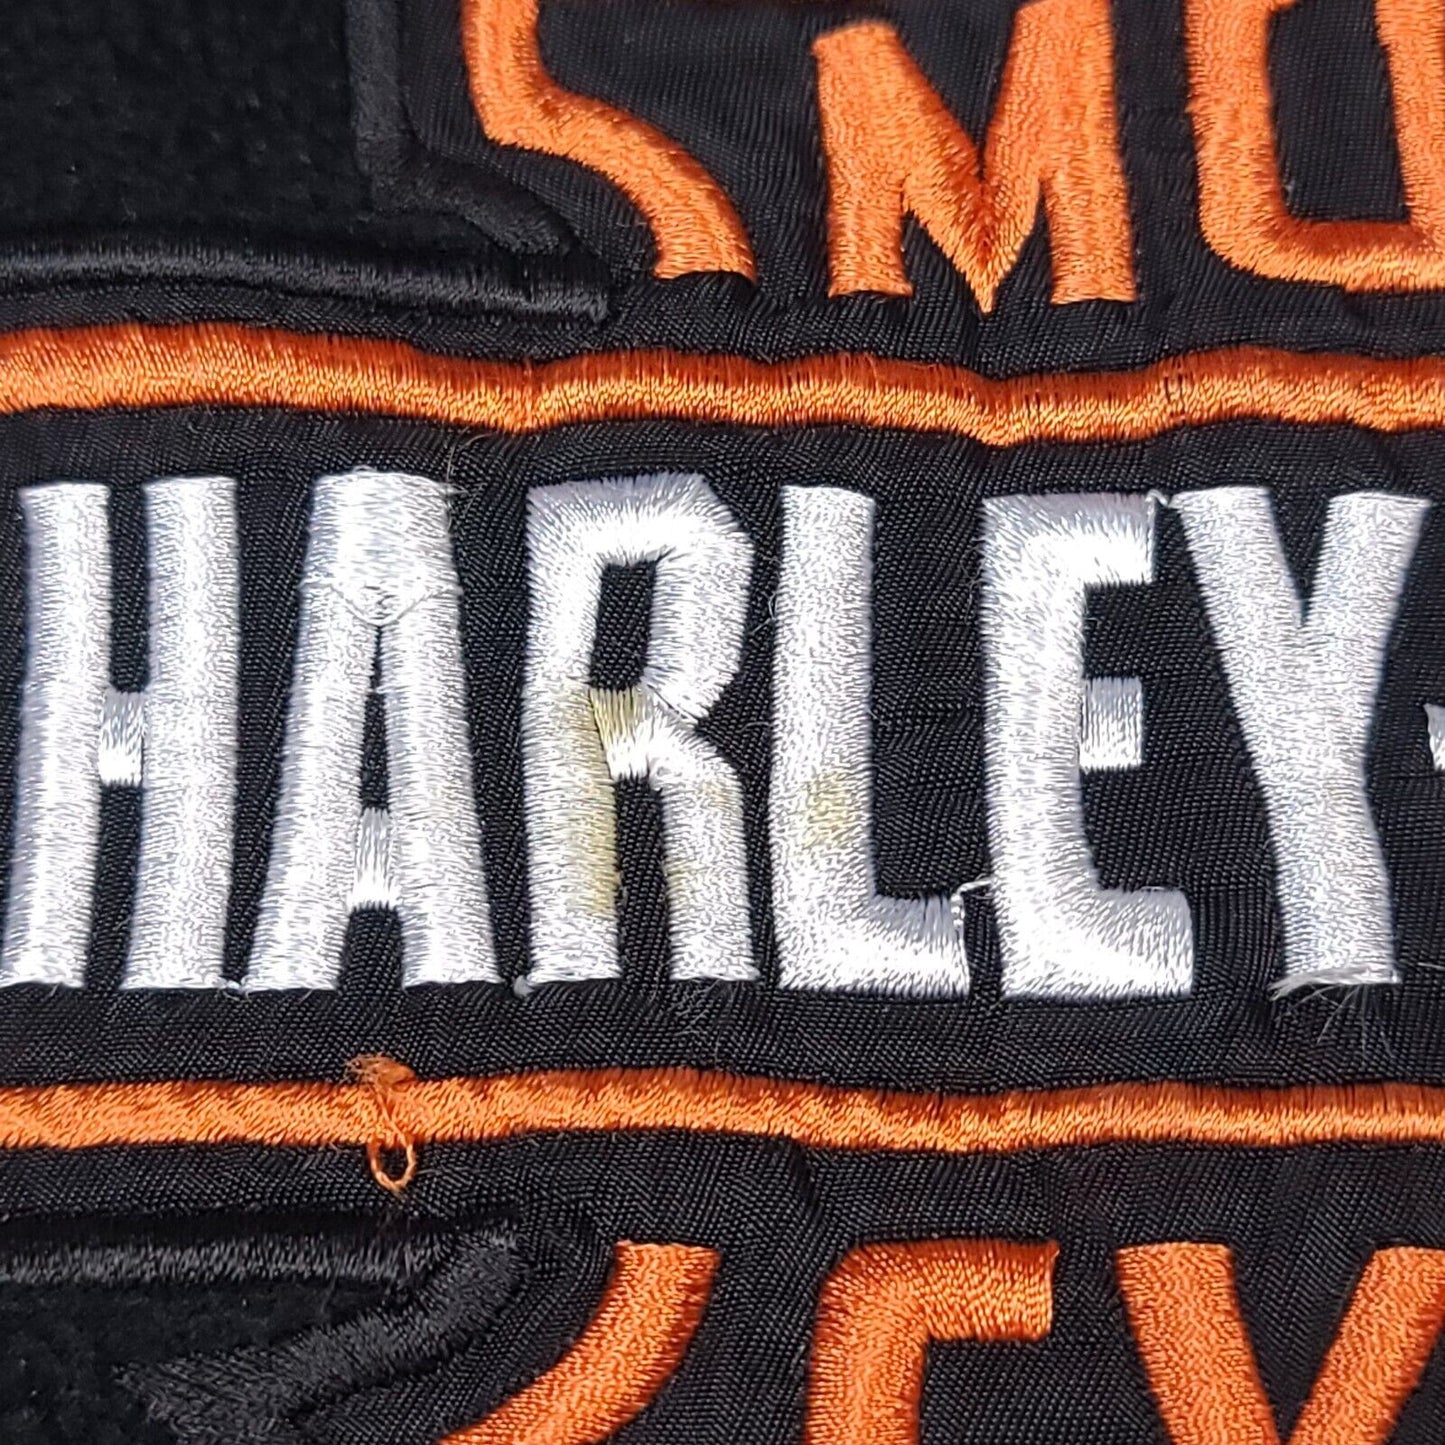 Harley Davidson Motorcycles Black Orange Fleece V Neck Sweater